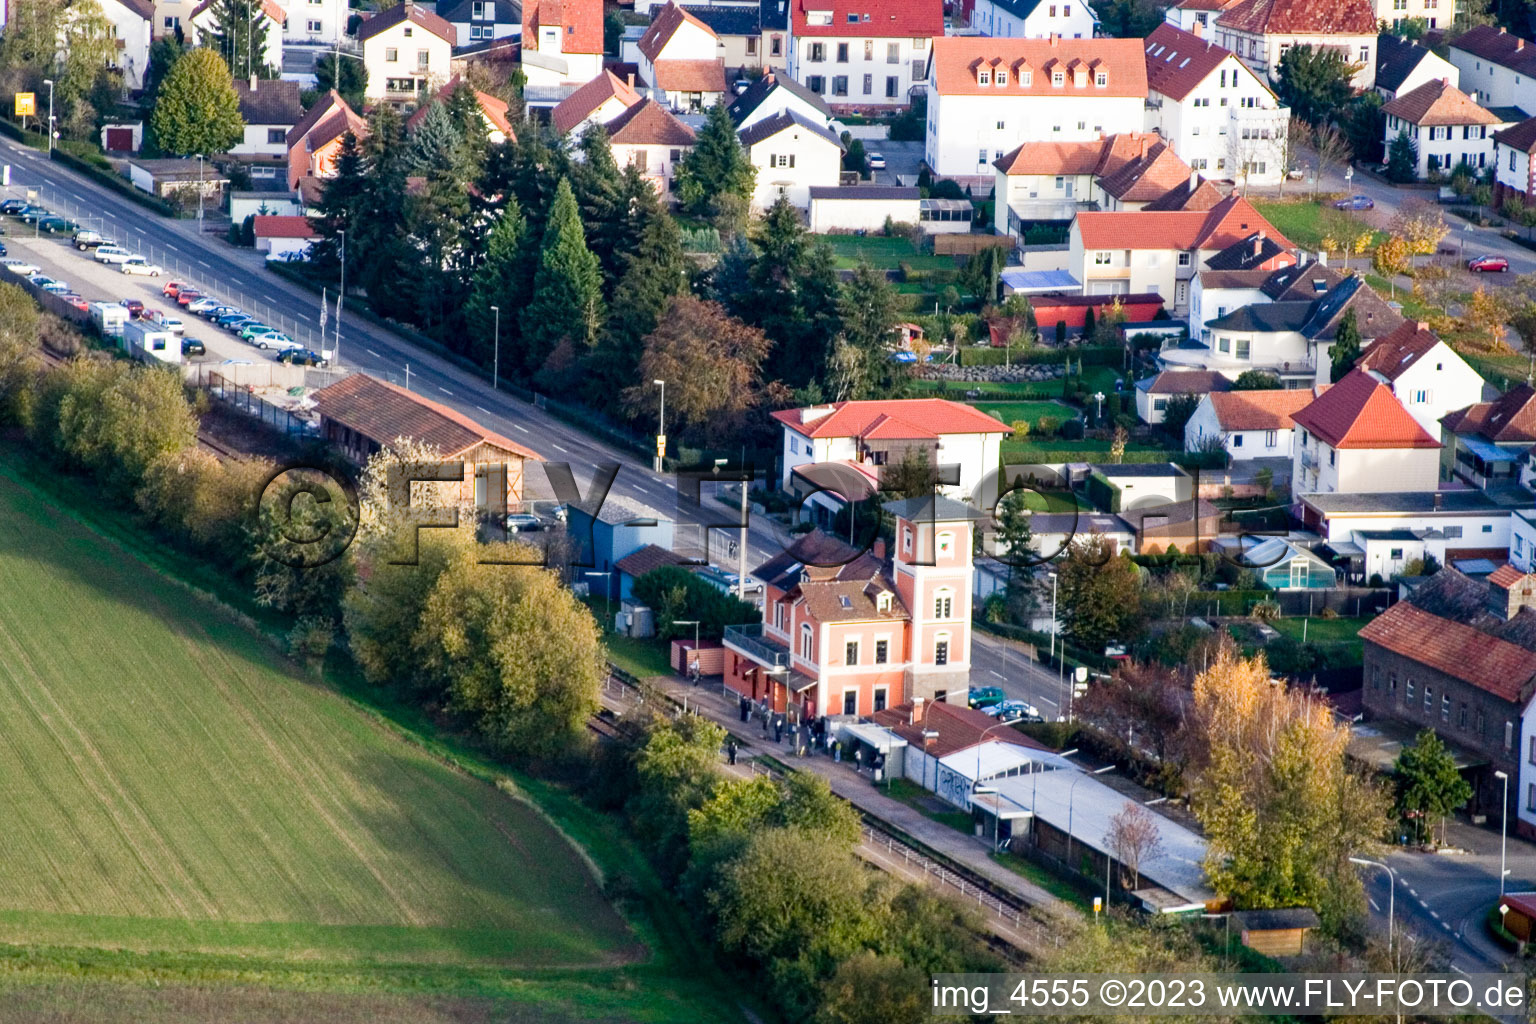 Aerial view of Bahnhofstr in Rülzheim in the state Rhineland-Palatinate, Germany